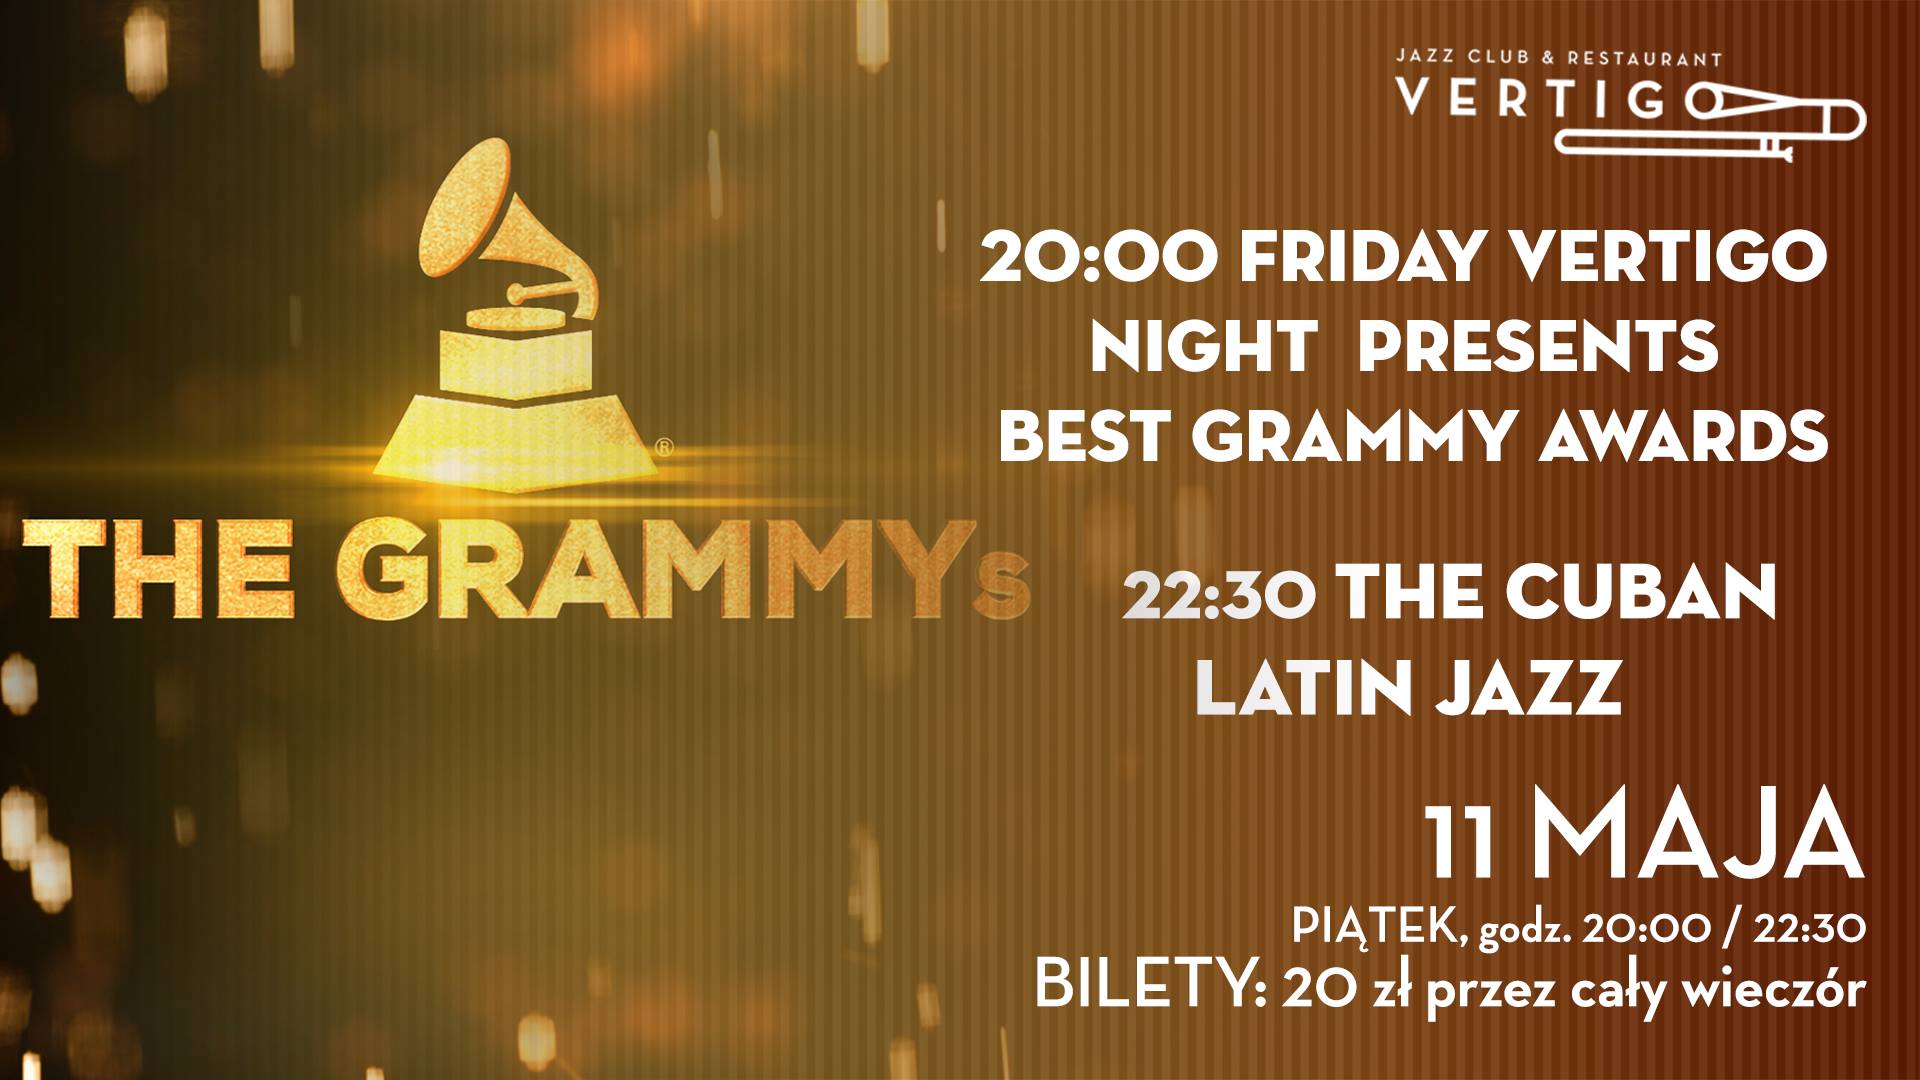 Best Grammy Awards / The Cuban Latin Jazz Vertigo Jazz Club